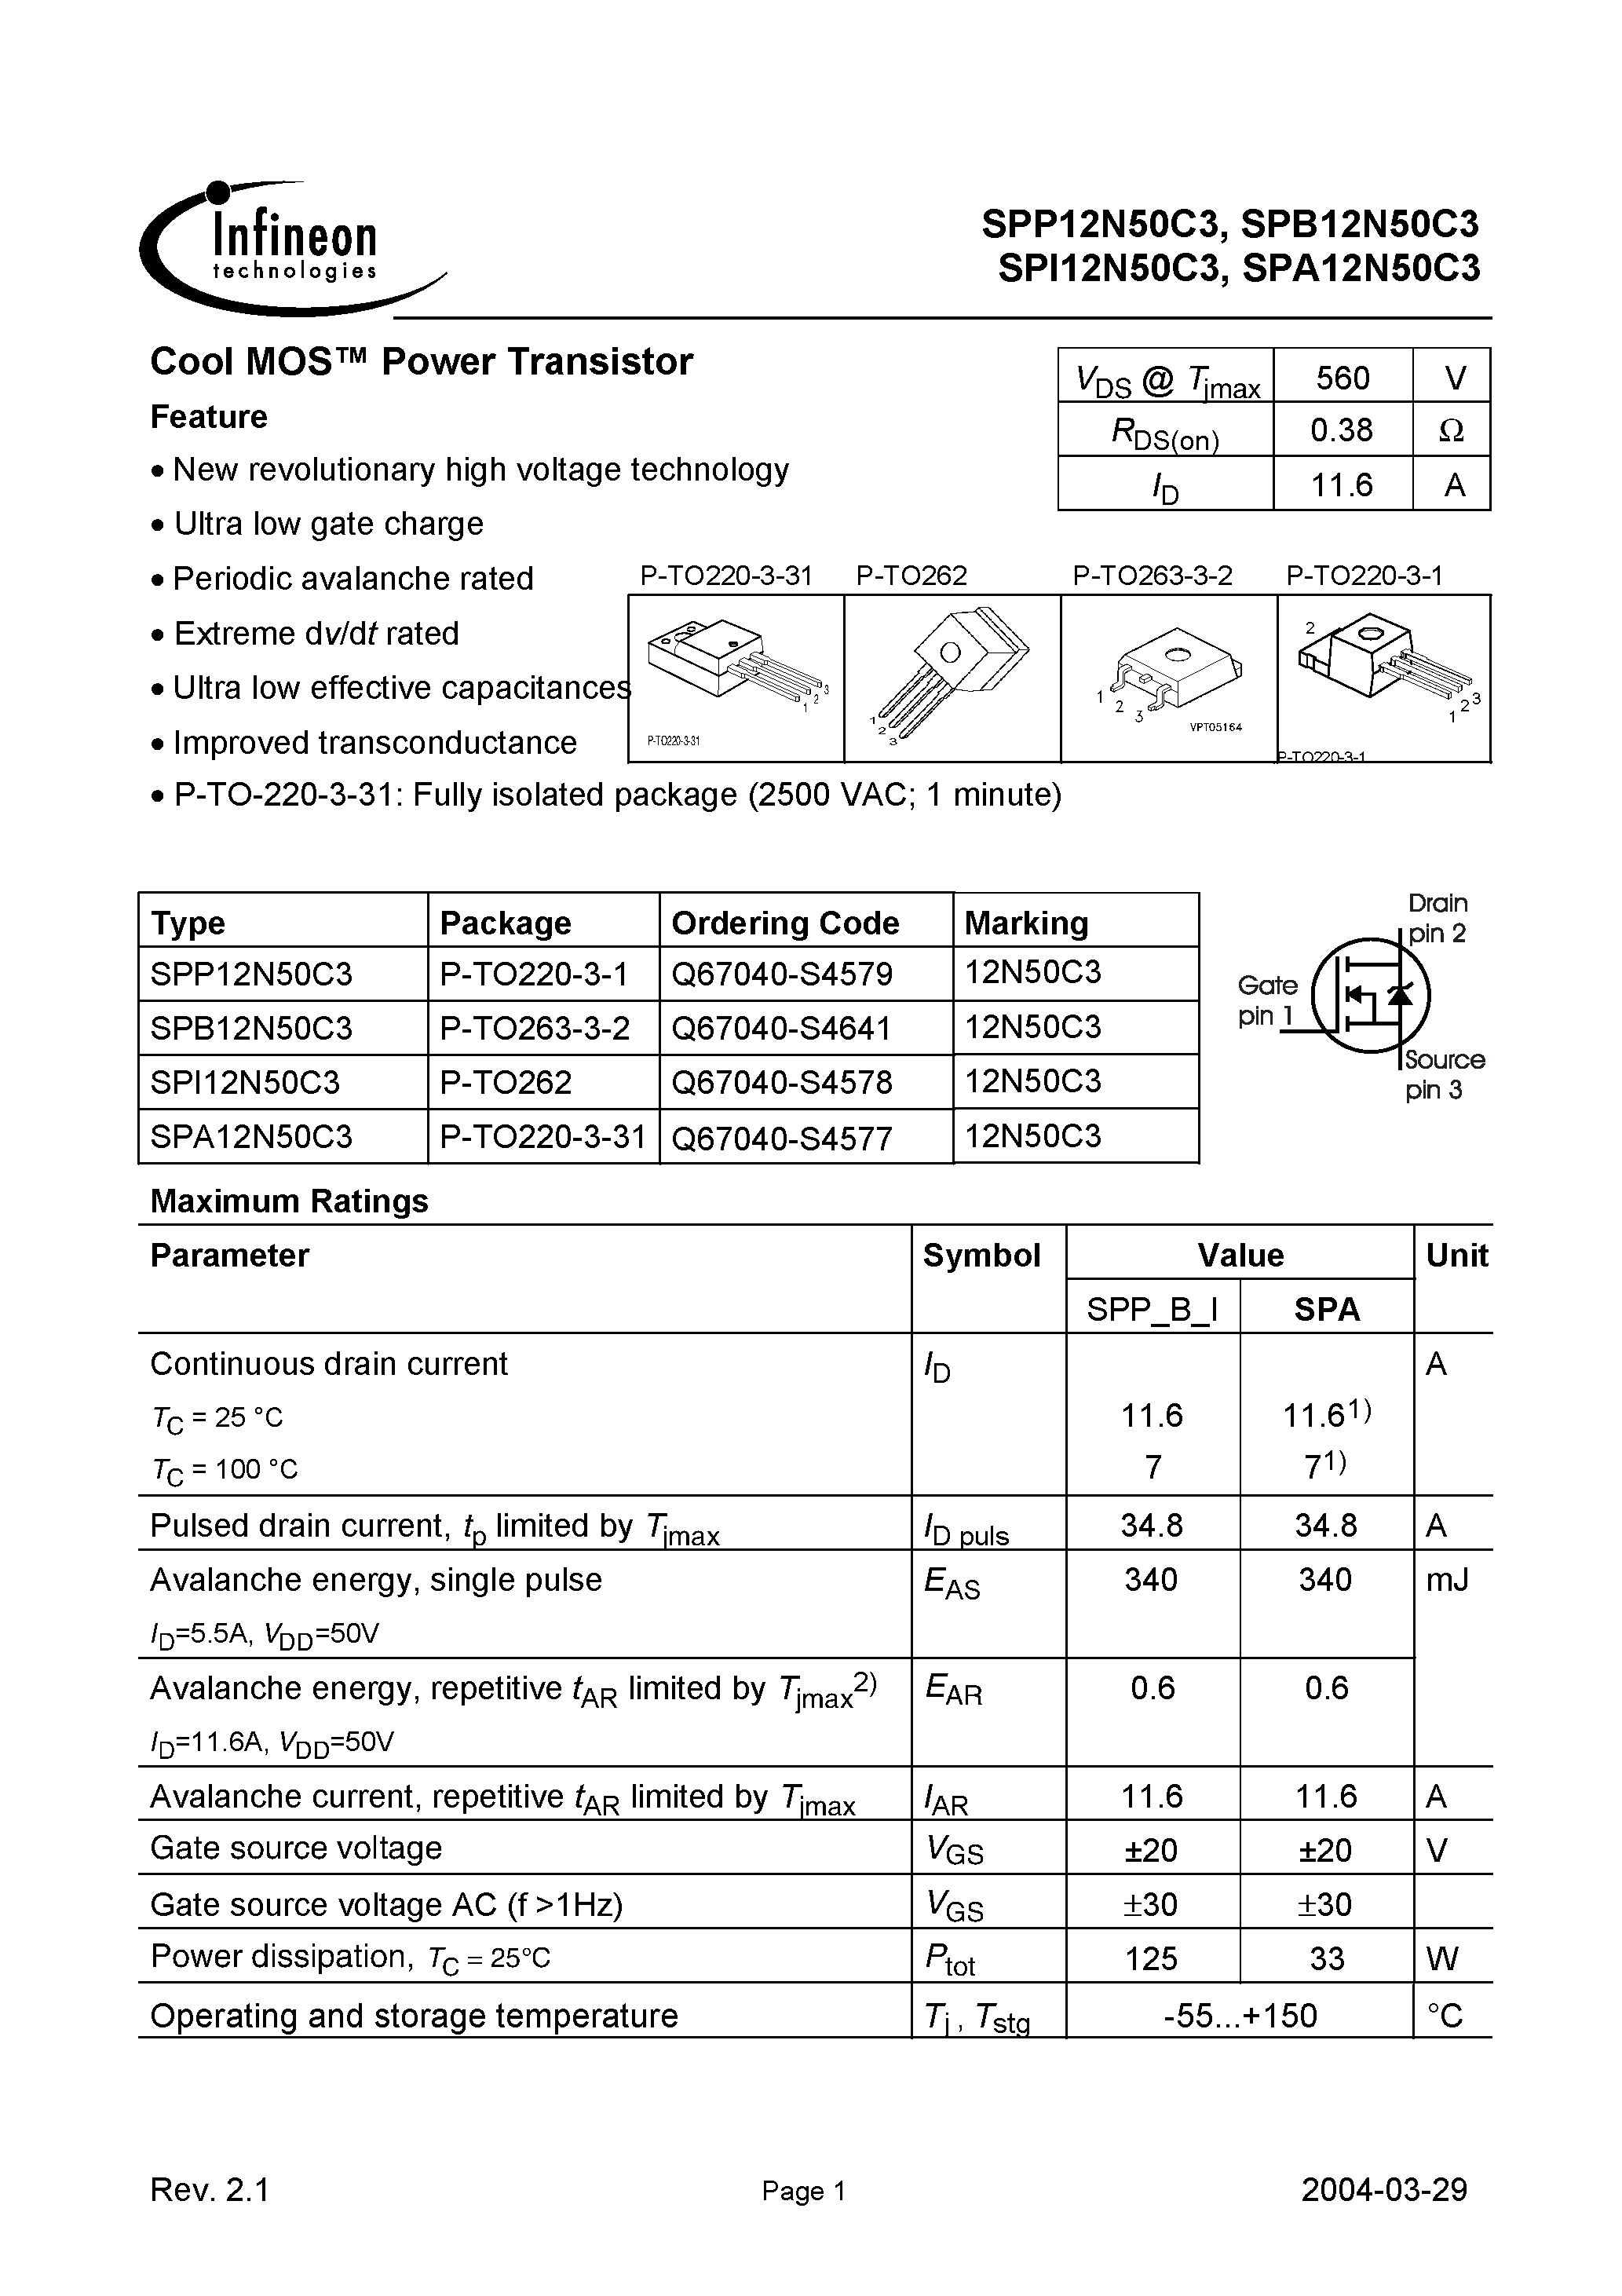 Datasheet SPI12N50C3 - Cool MOS Power Transistor page 1